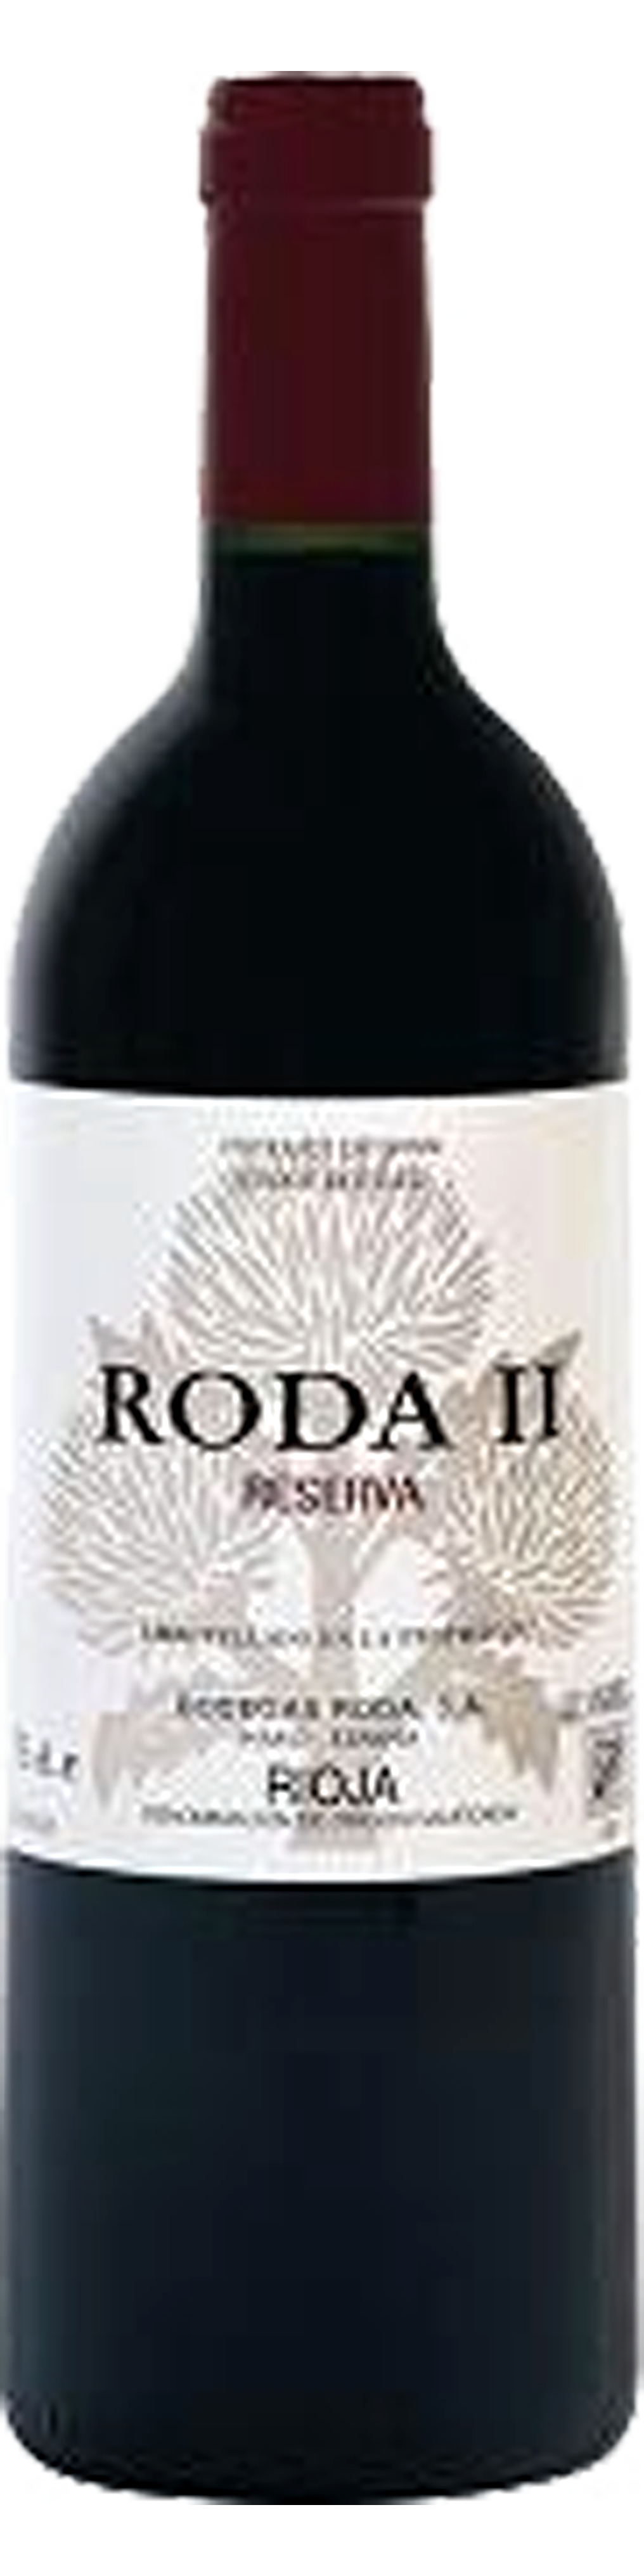 Bottle shot of 1996 Roda II Reserva